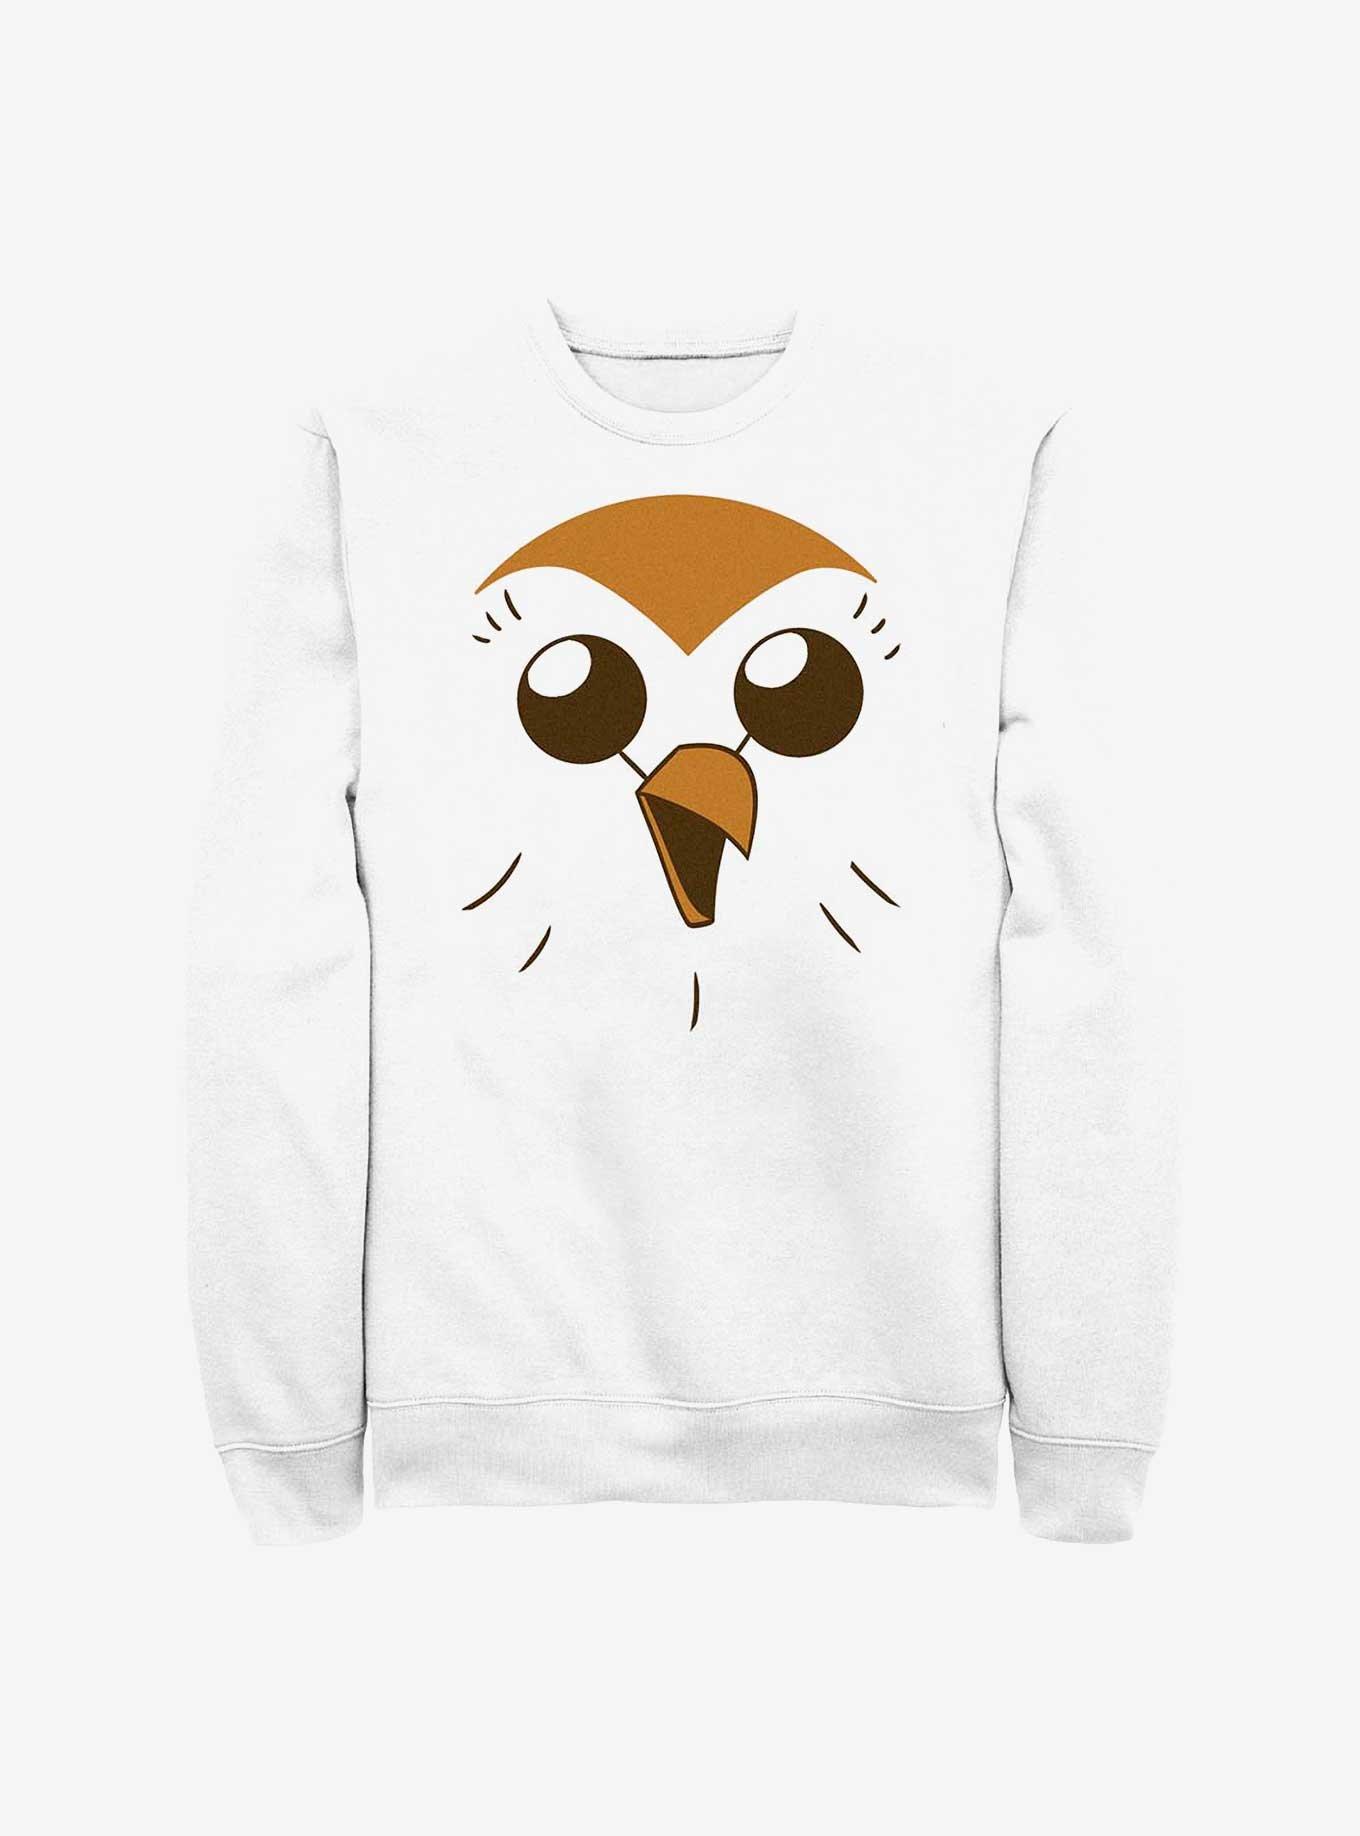 Disney The Owl House Hooty Face Sweatshirt